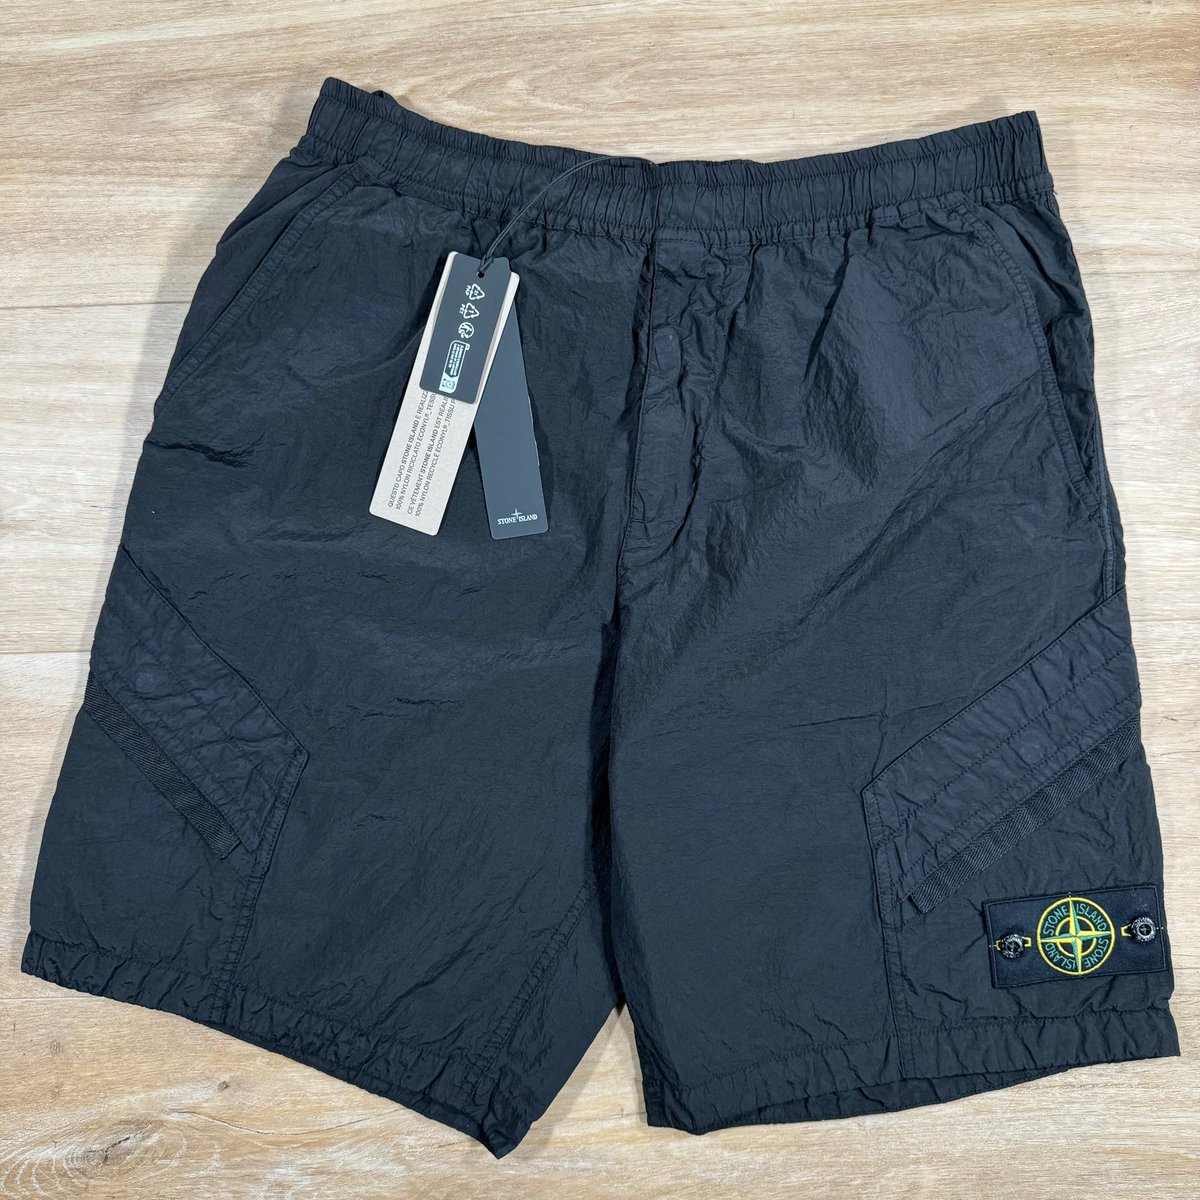 Stone Island nylon metal shorts in Black Save 20% here 👉🏼 label-menswear.com/products/stone…